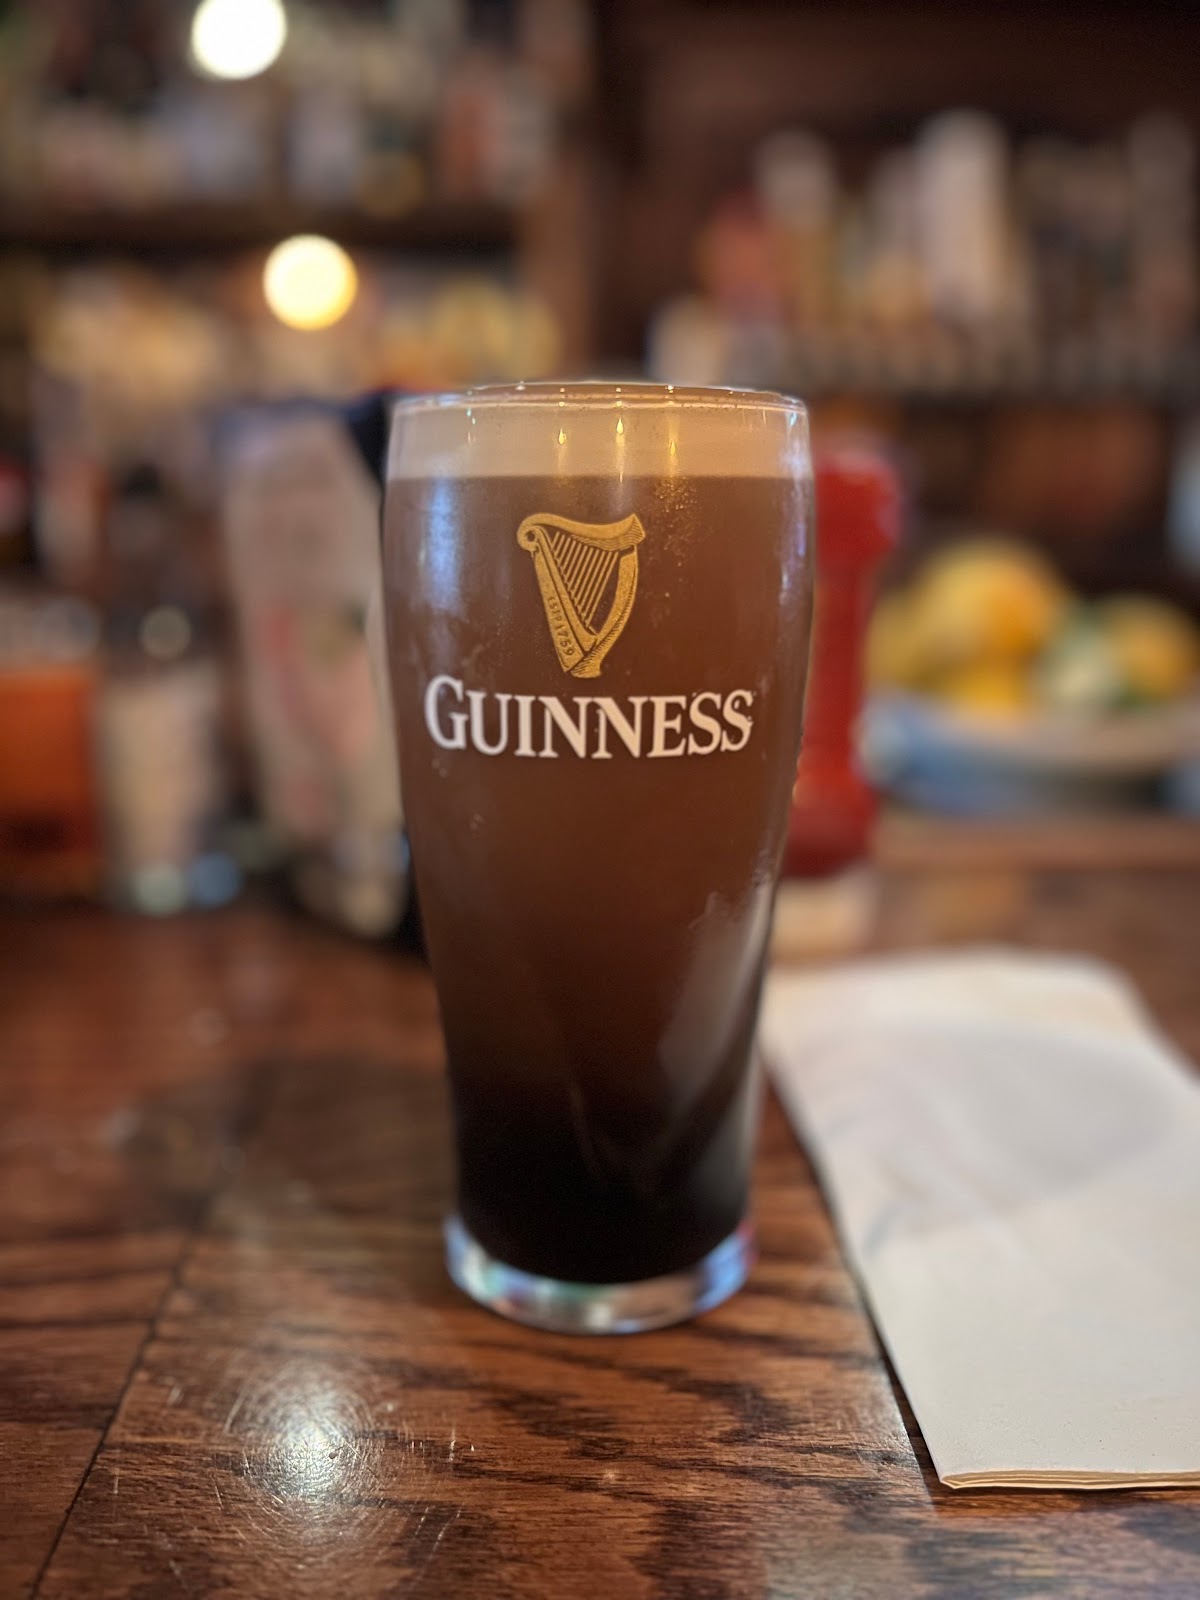 Mary Margaret's Olde Irish Tavern Best Happy Hour